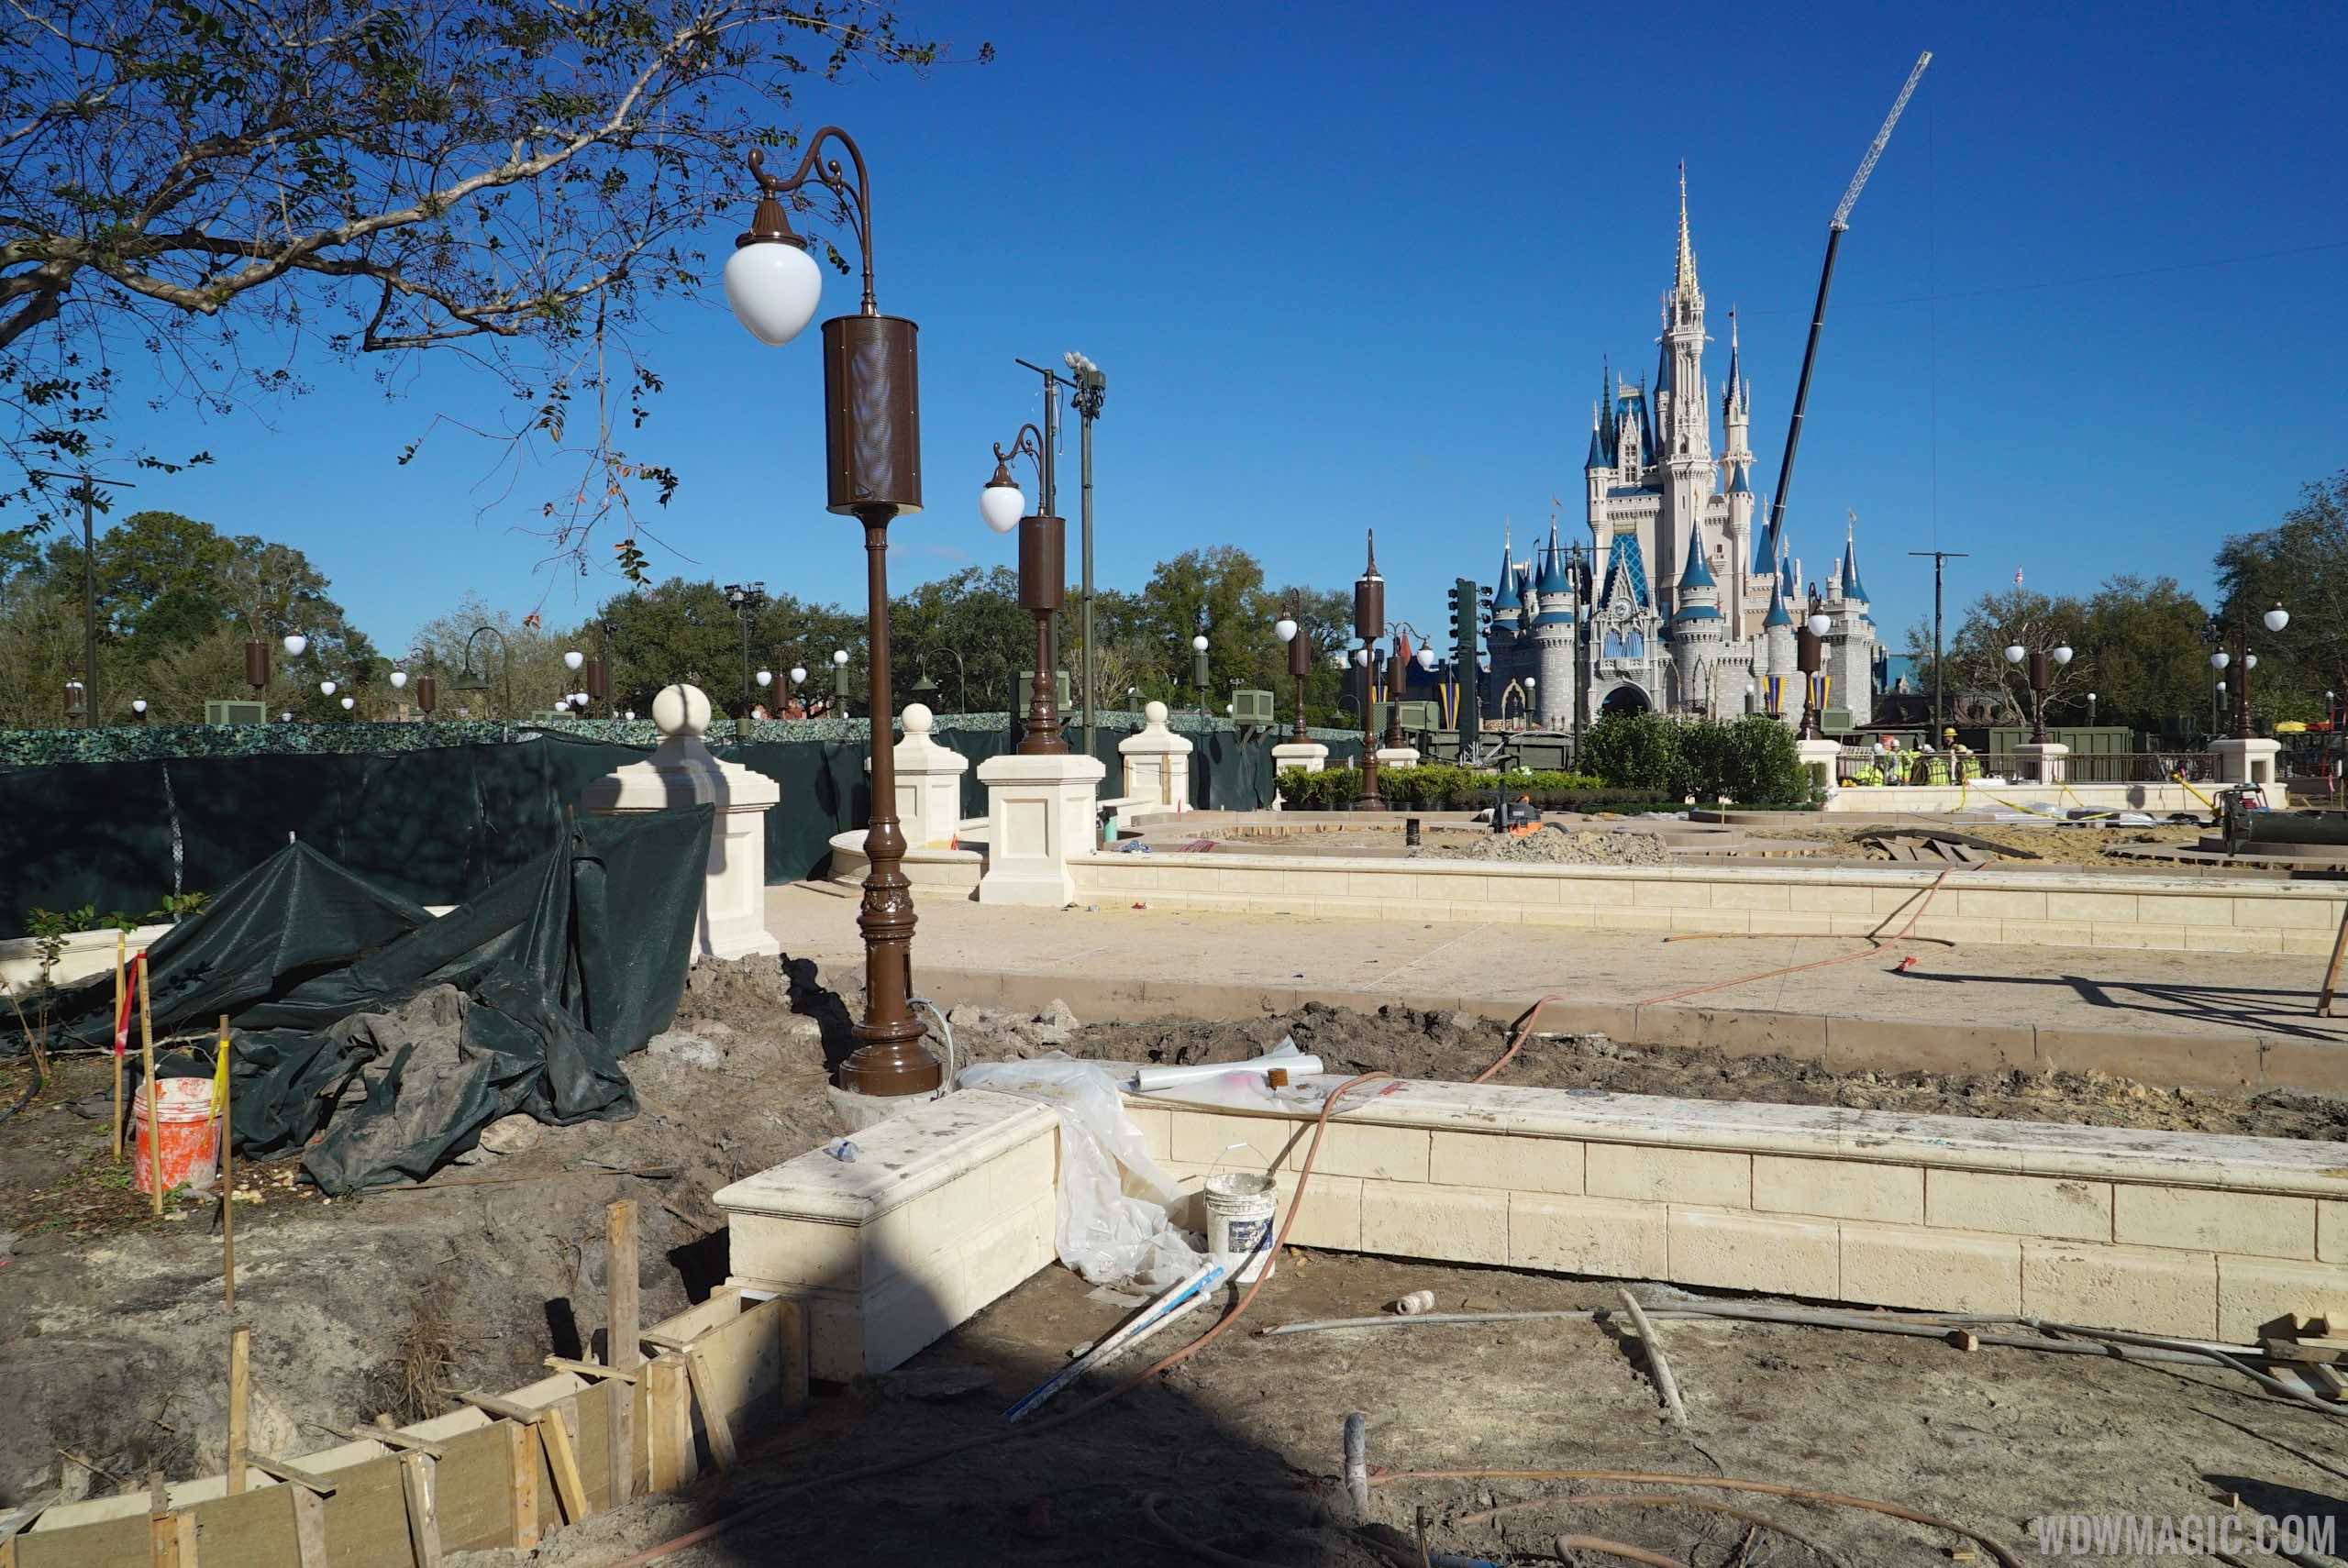 PHOTOS - Some construction walls down around the new Main Street Plaza Gardens at the Magic Kingdom